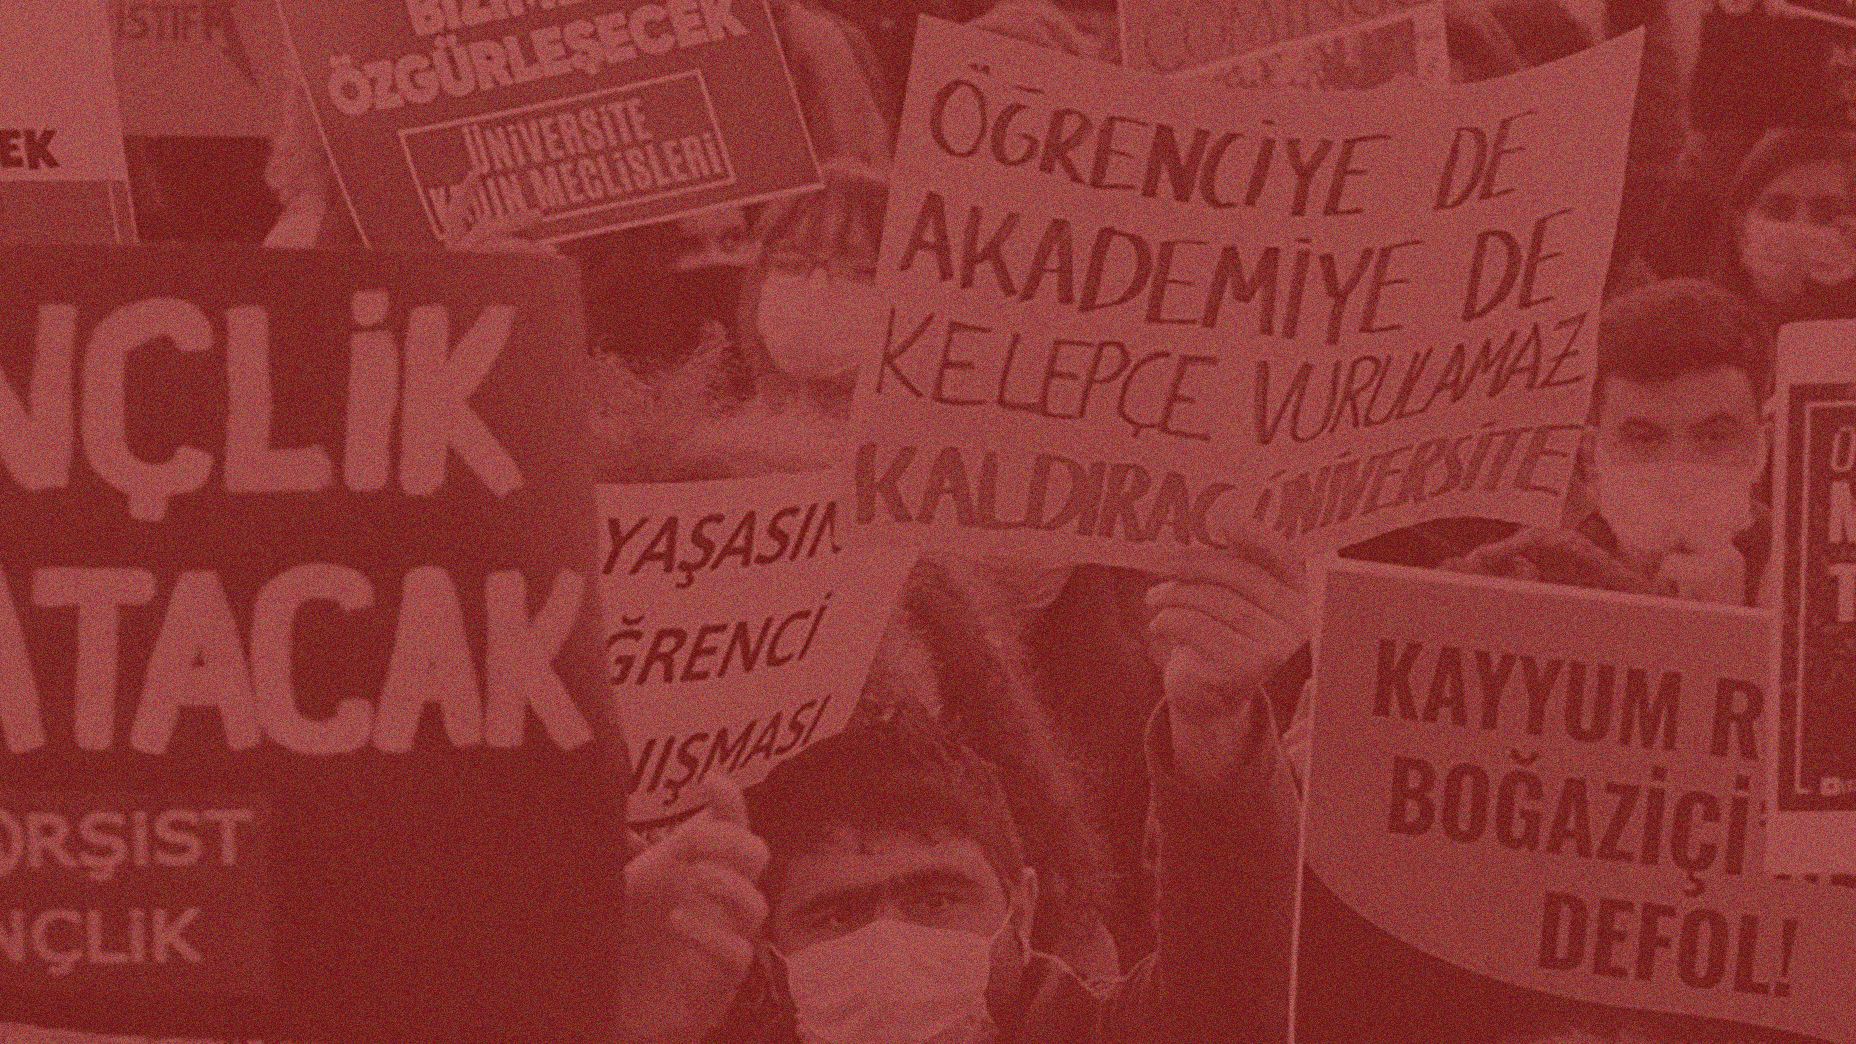 Protest in Turkey